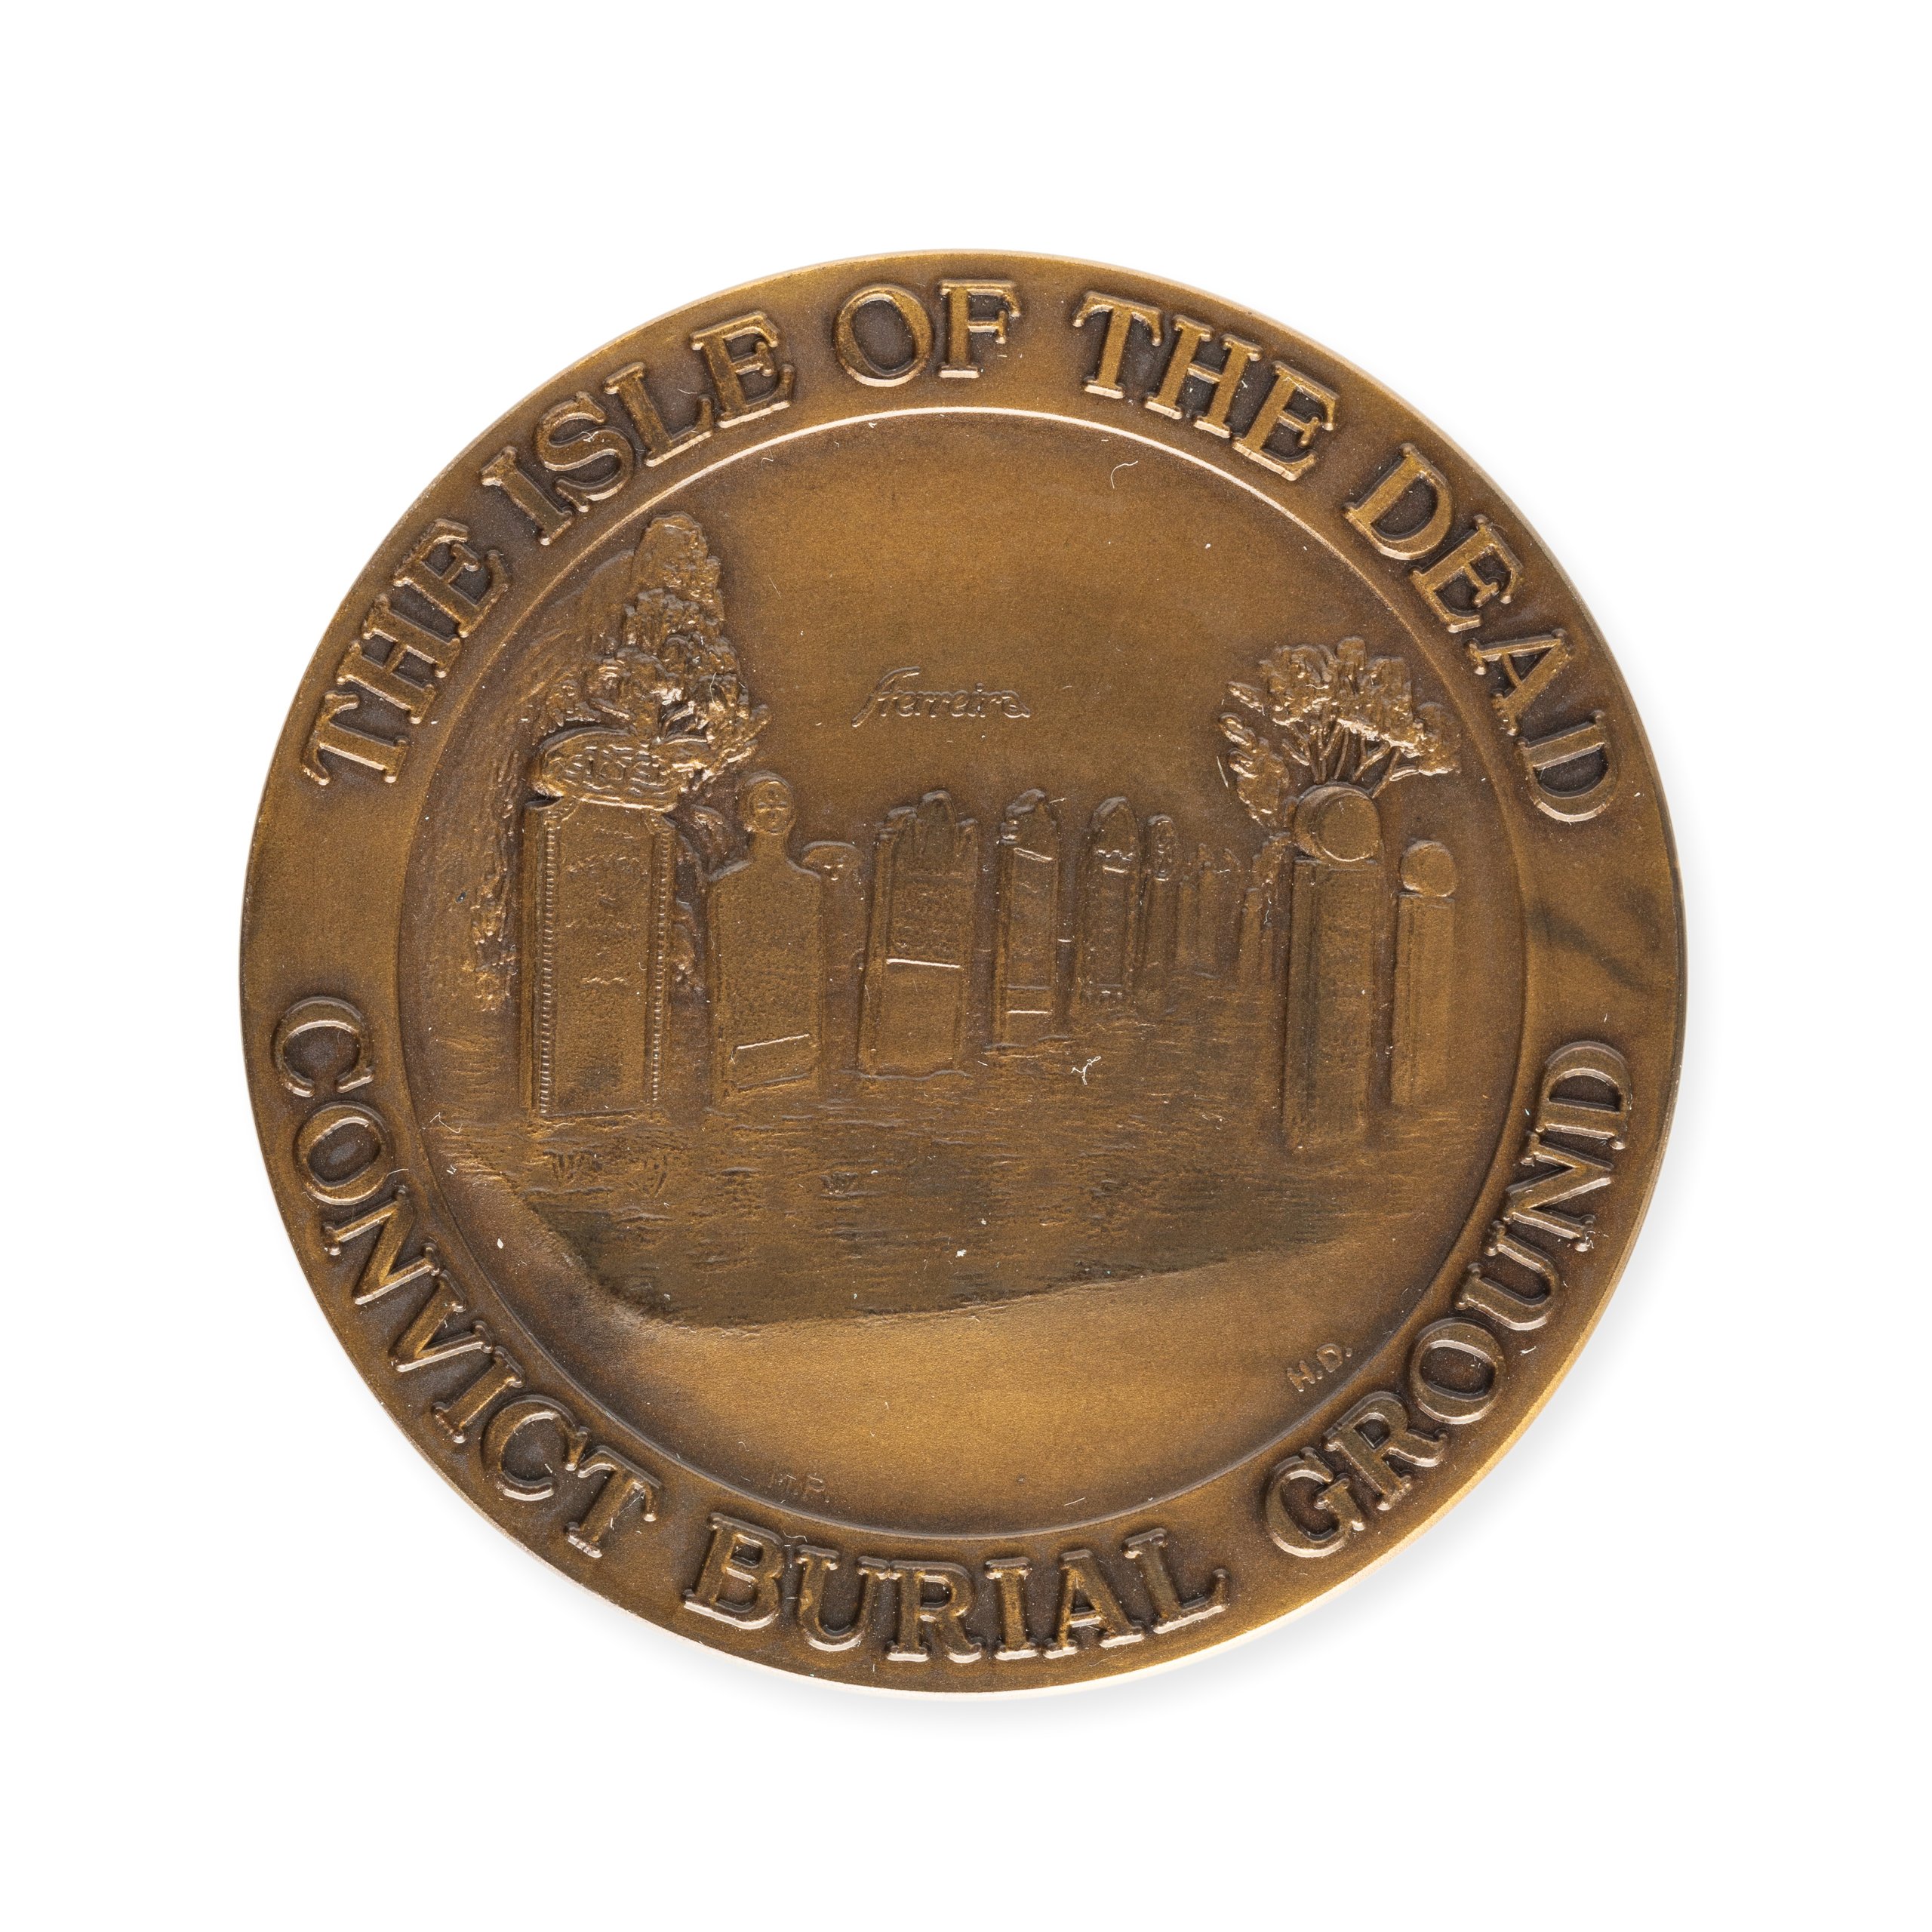 Port Arthur 150th Anniversary commemorative medallion